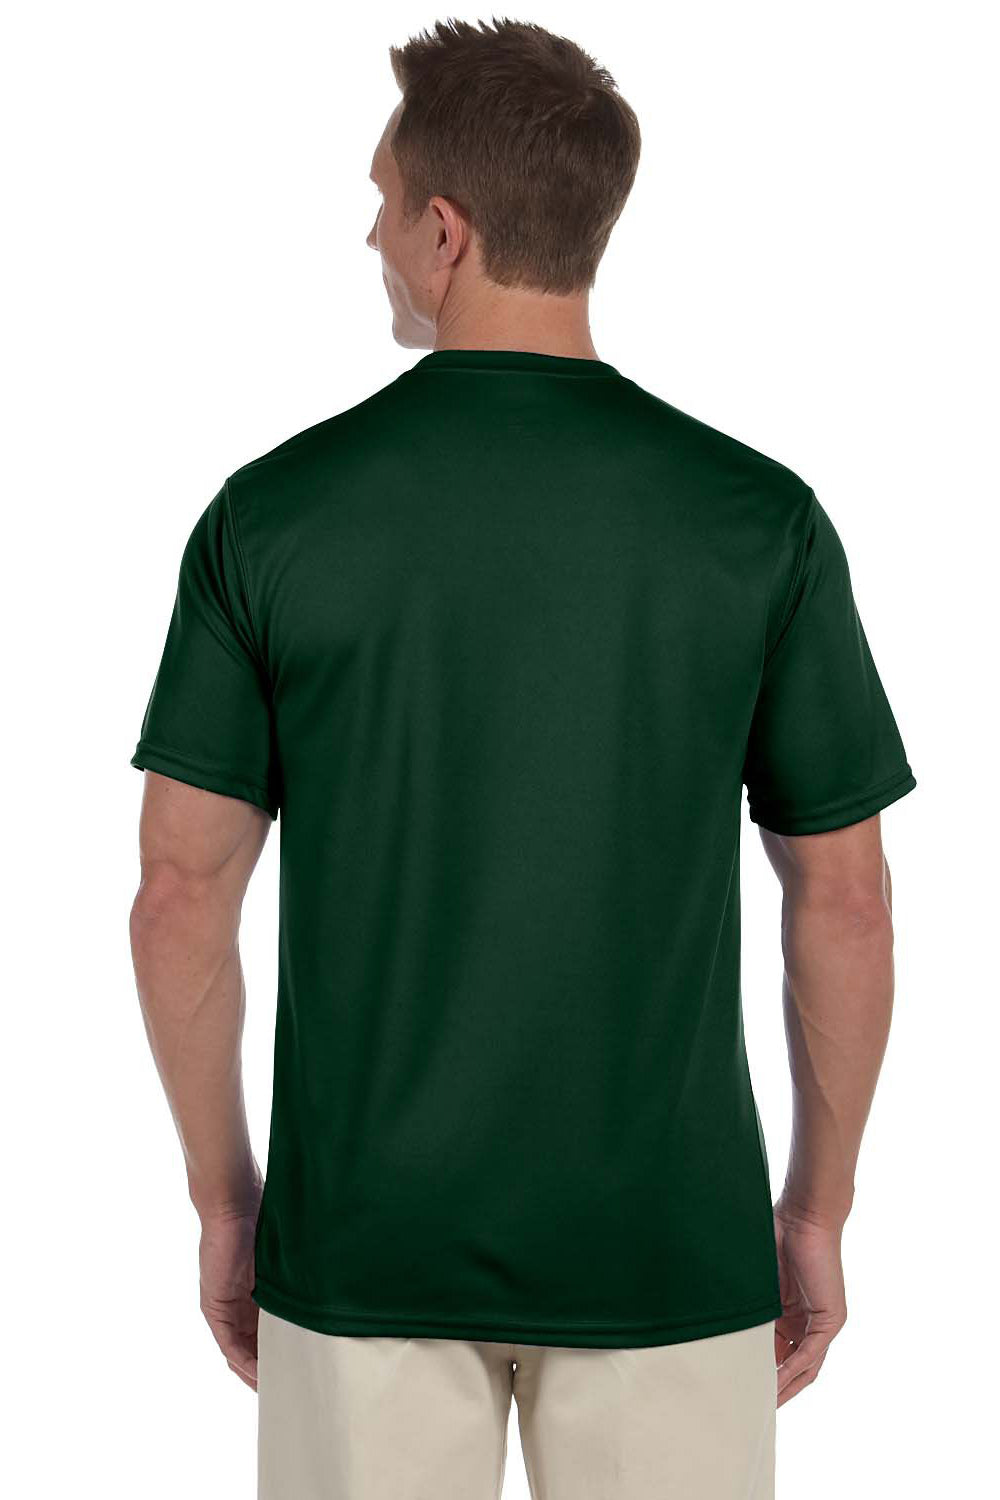 Augusta Sportswear 790 Mens Moisture Wicking Short Sleeve Crewneck T-Shirt Dark Green Model Back